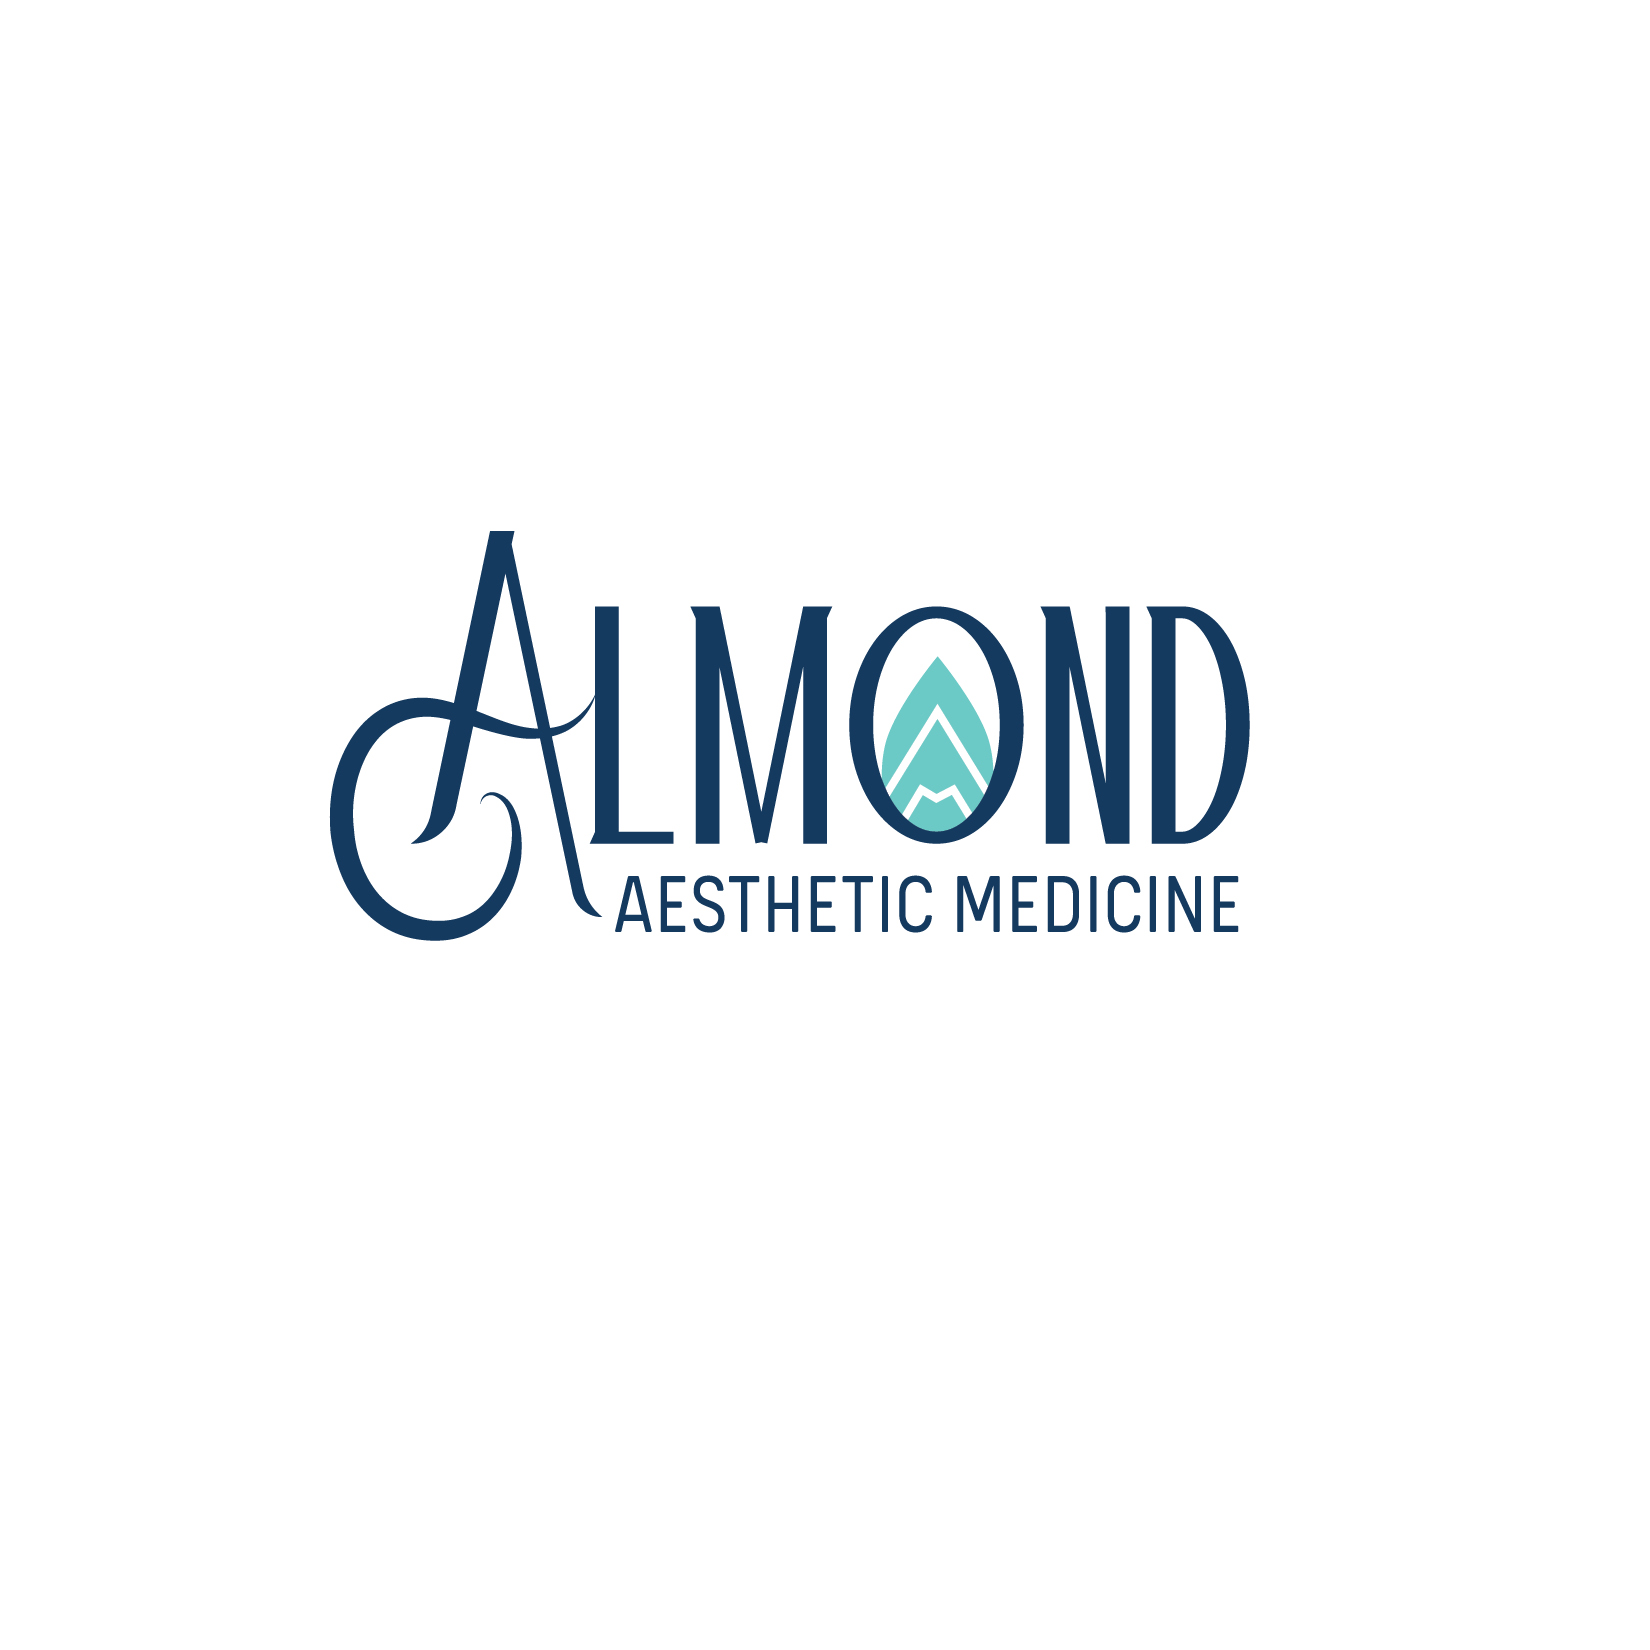 Almond Aesthetic Medicine